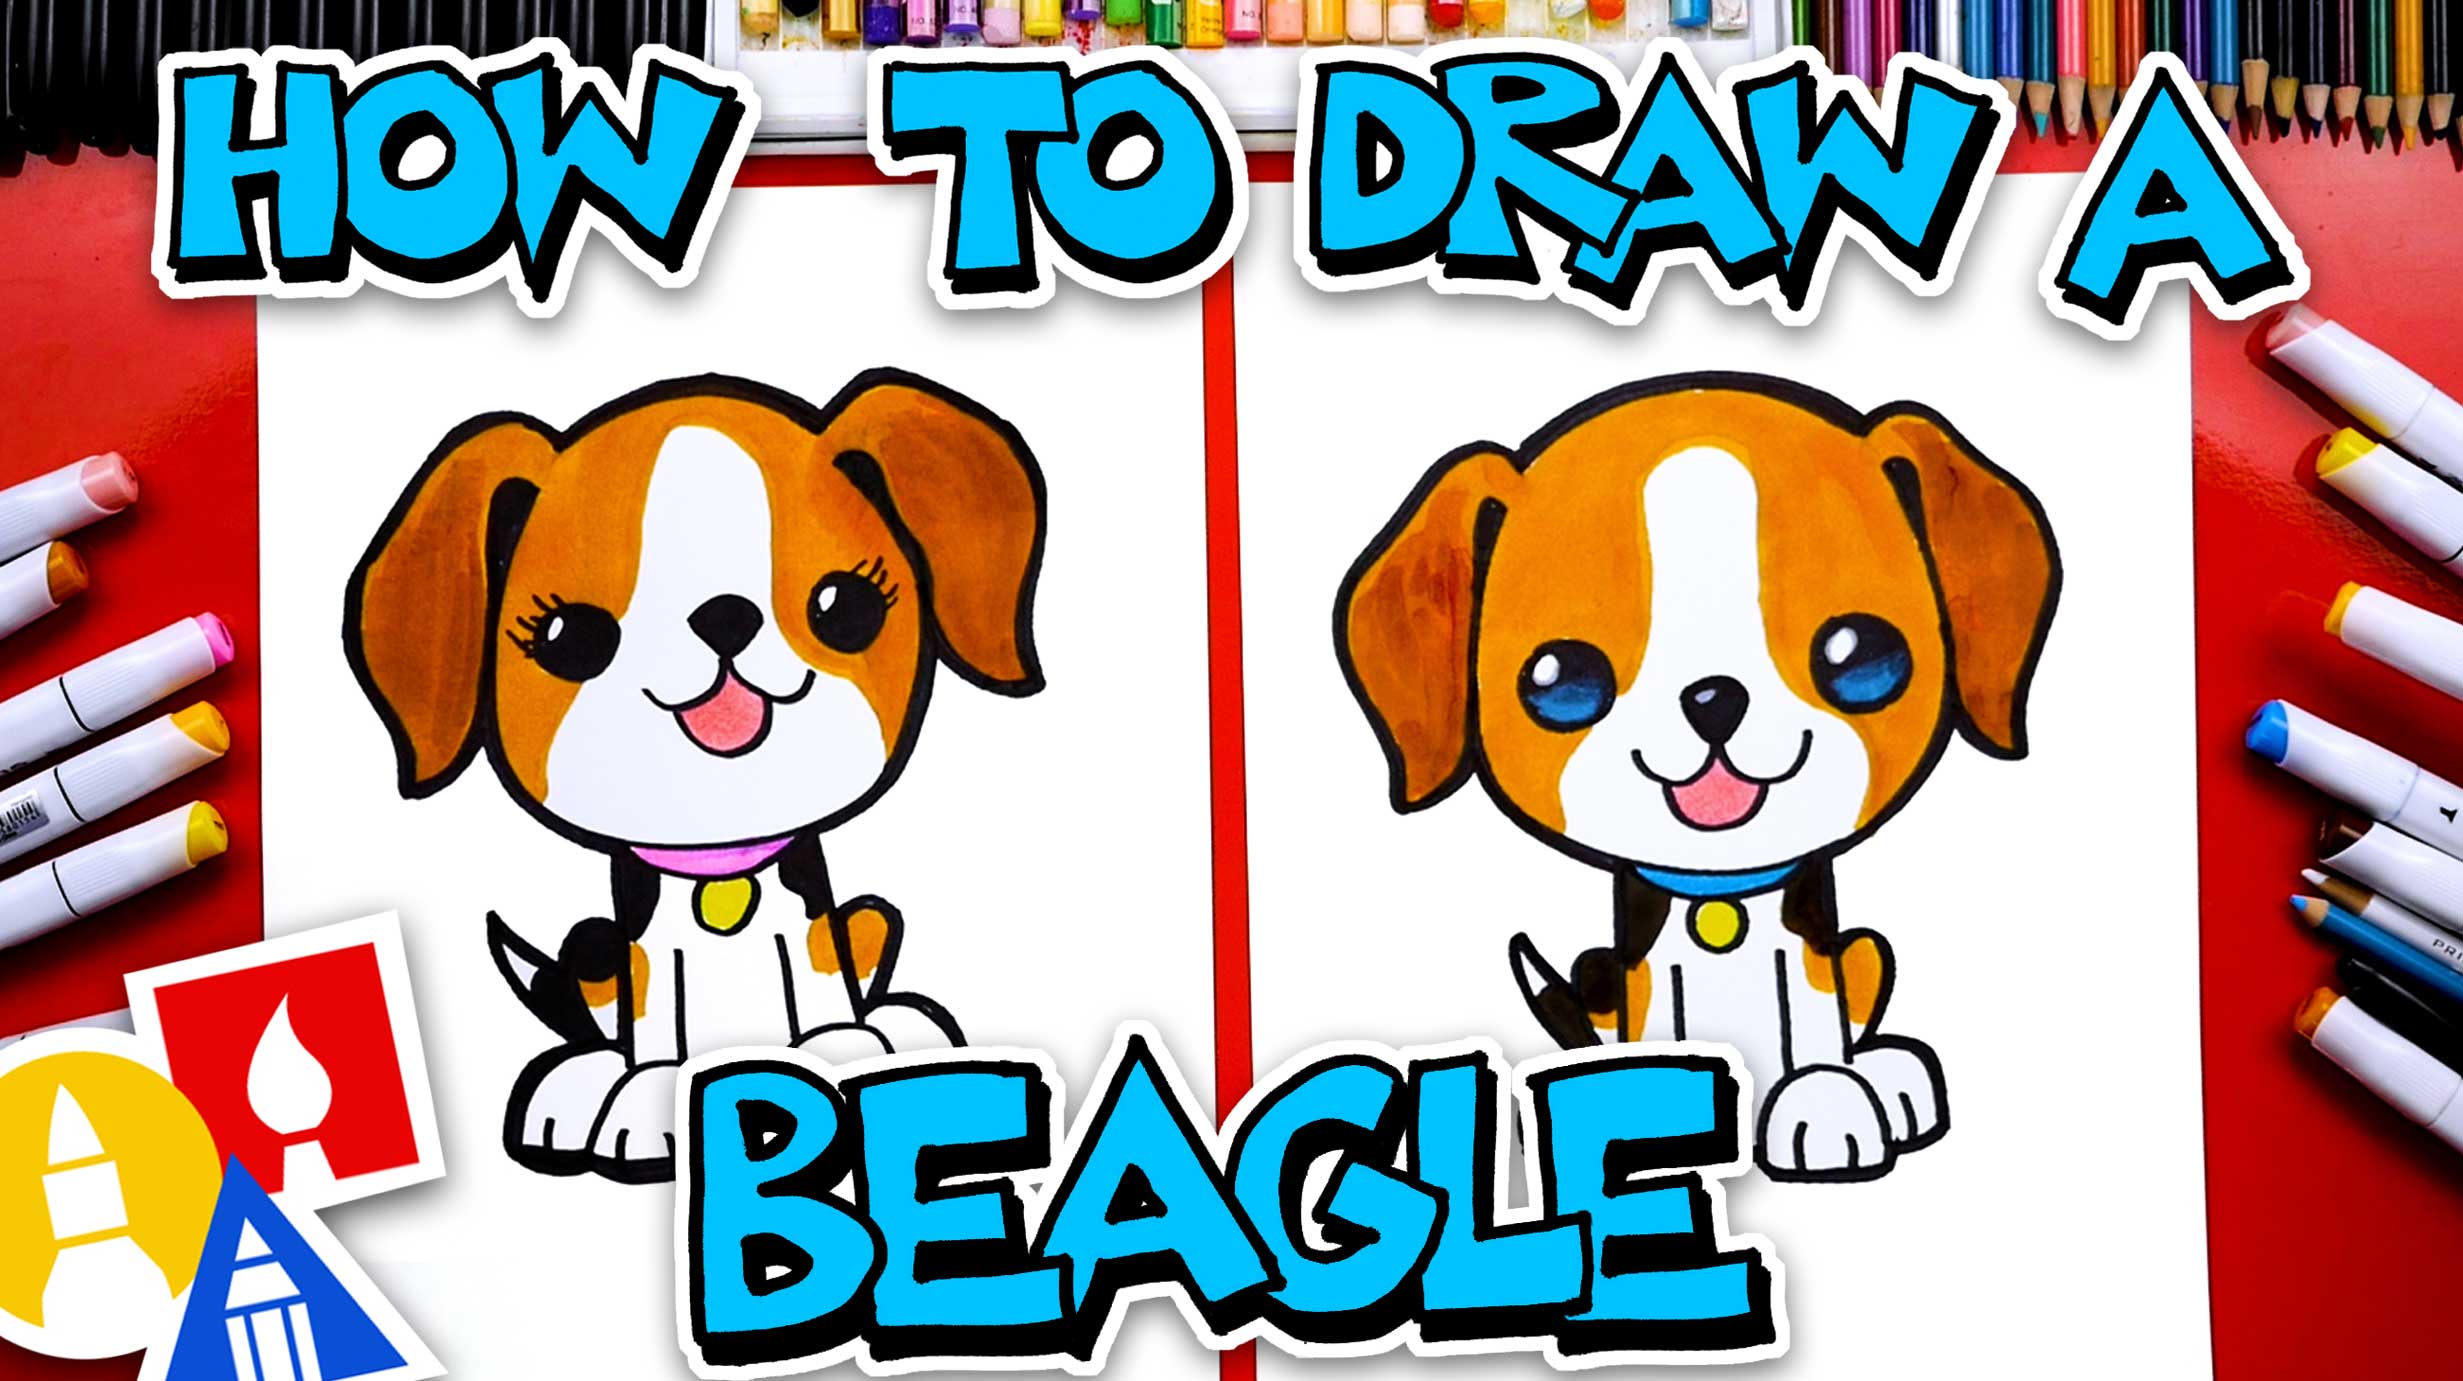 How To Draw A Cute Beagle Dog Cartoon